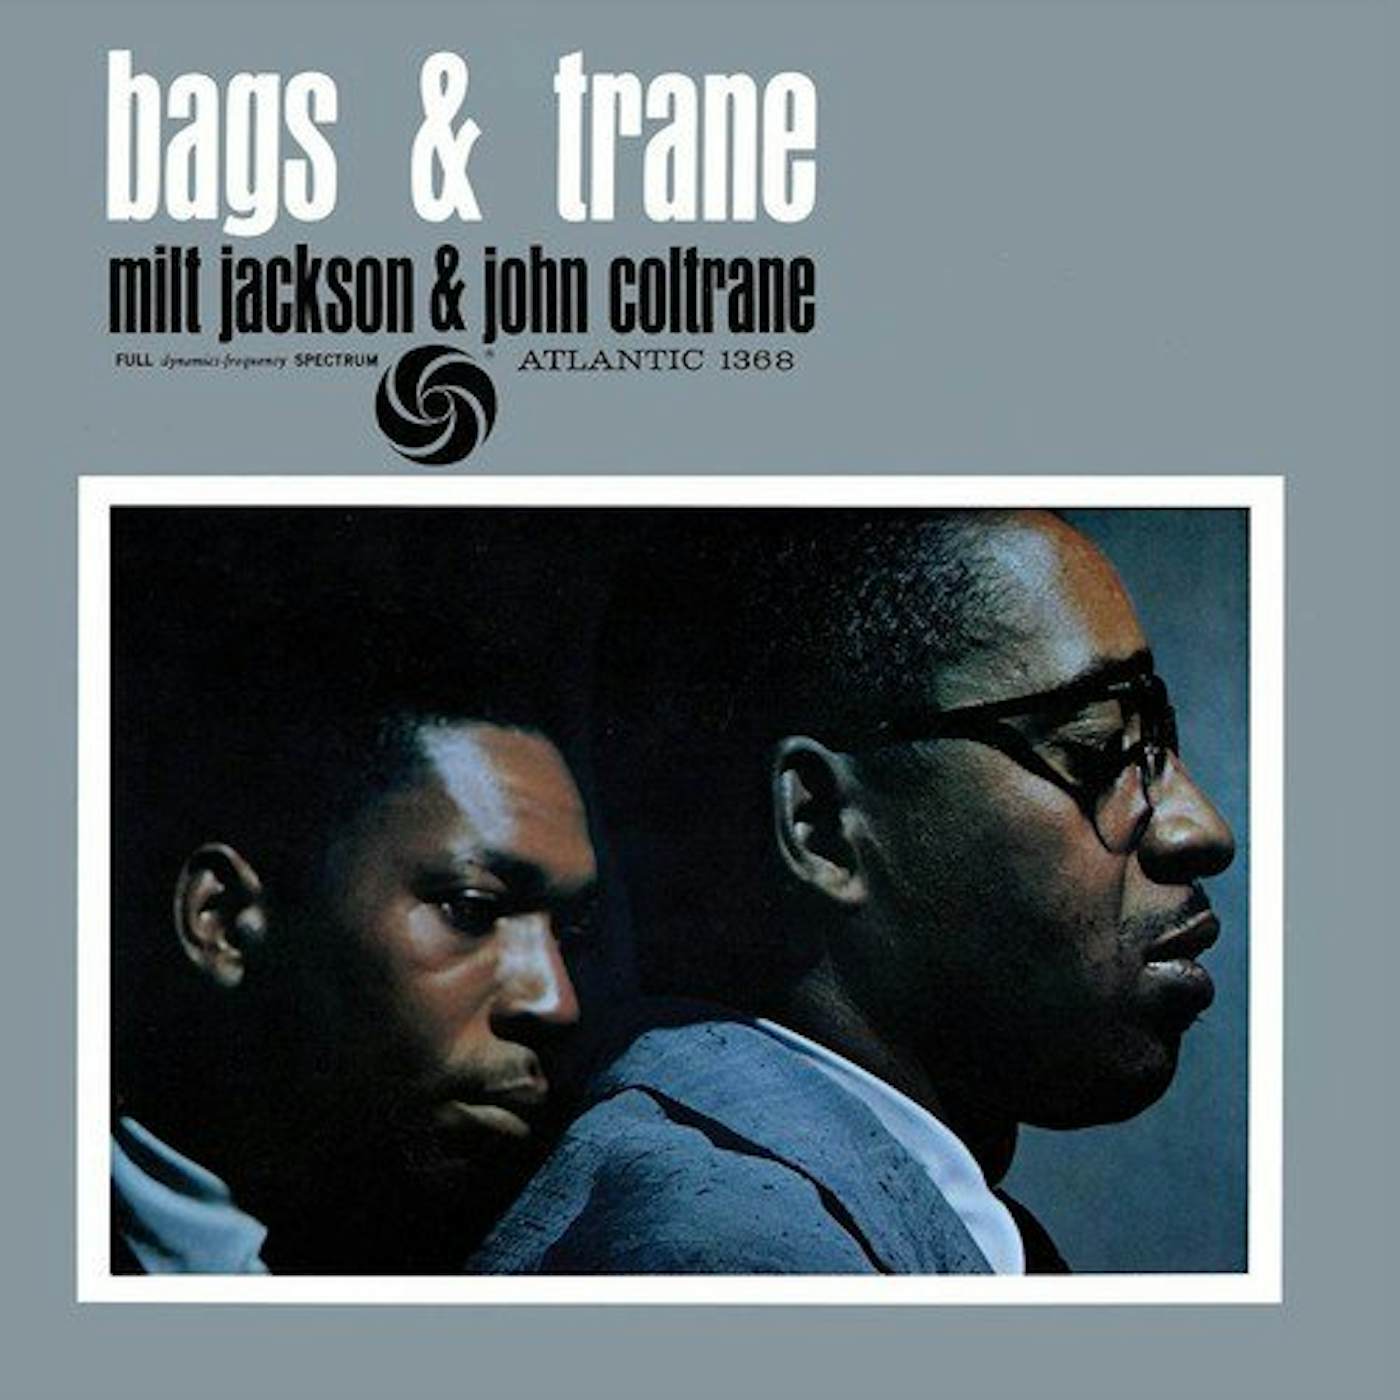 John Coltrane & Milt Jackson Bags & Trane Vinyl Record